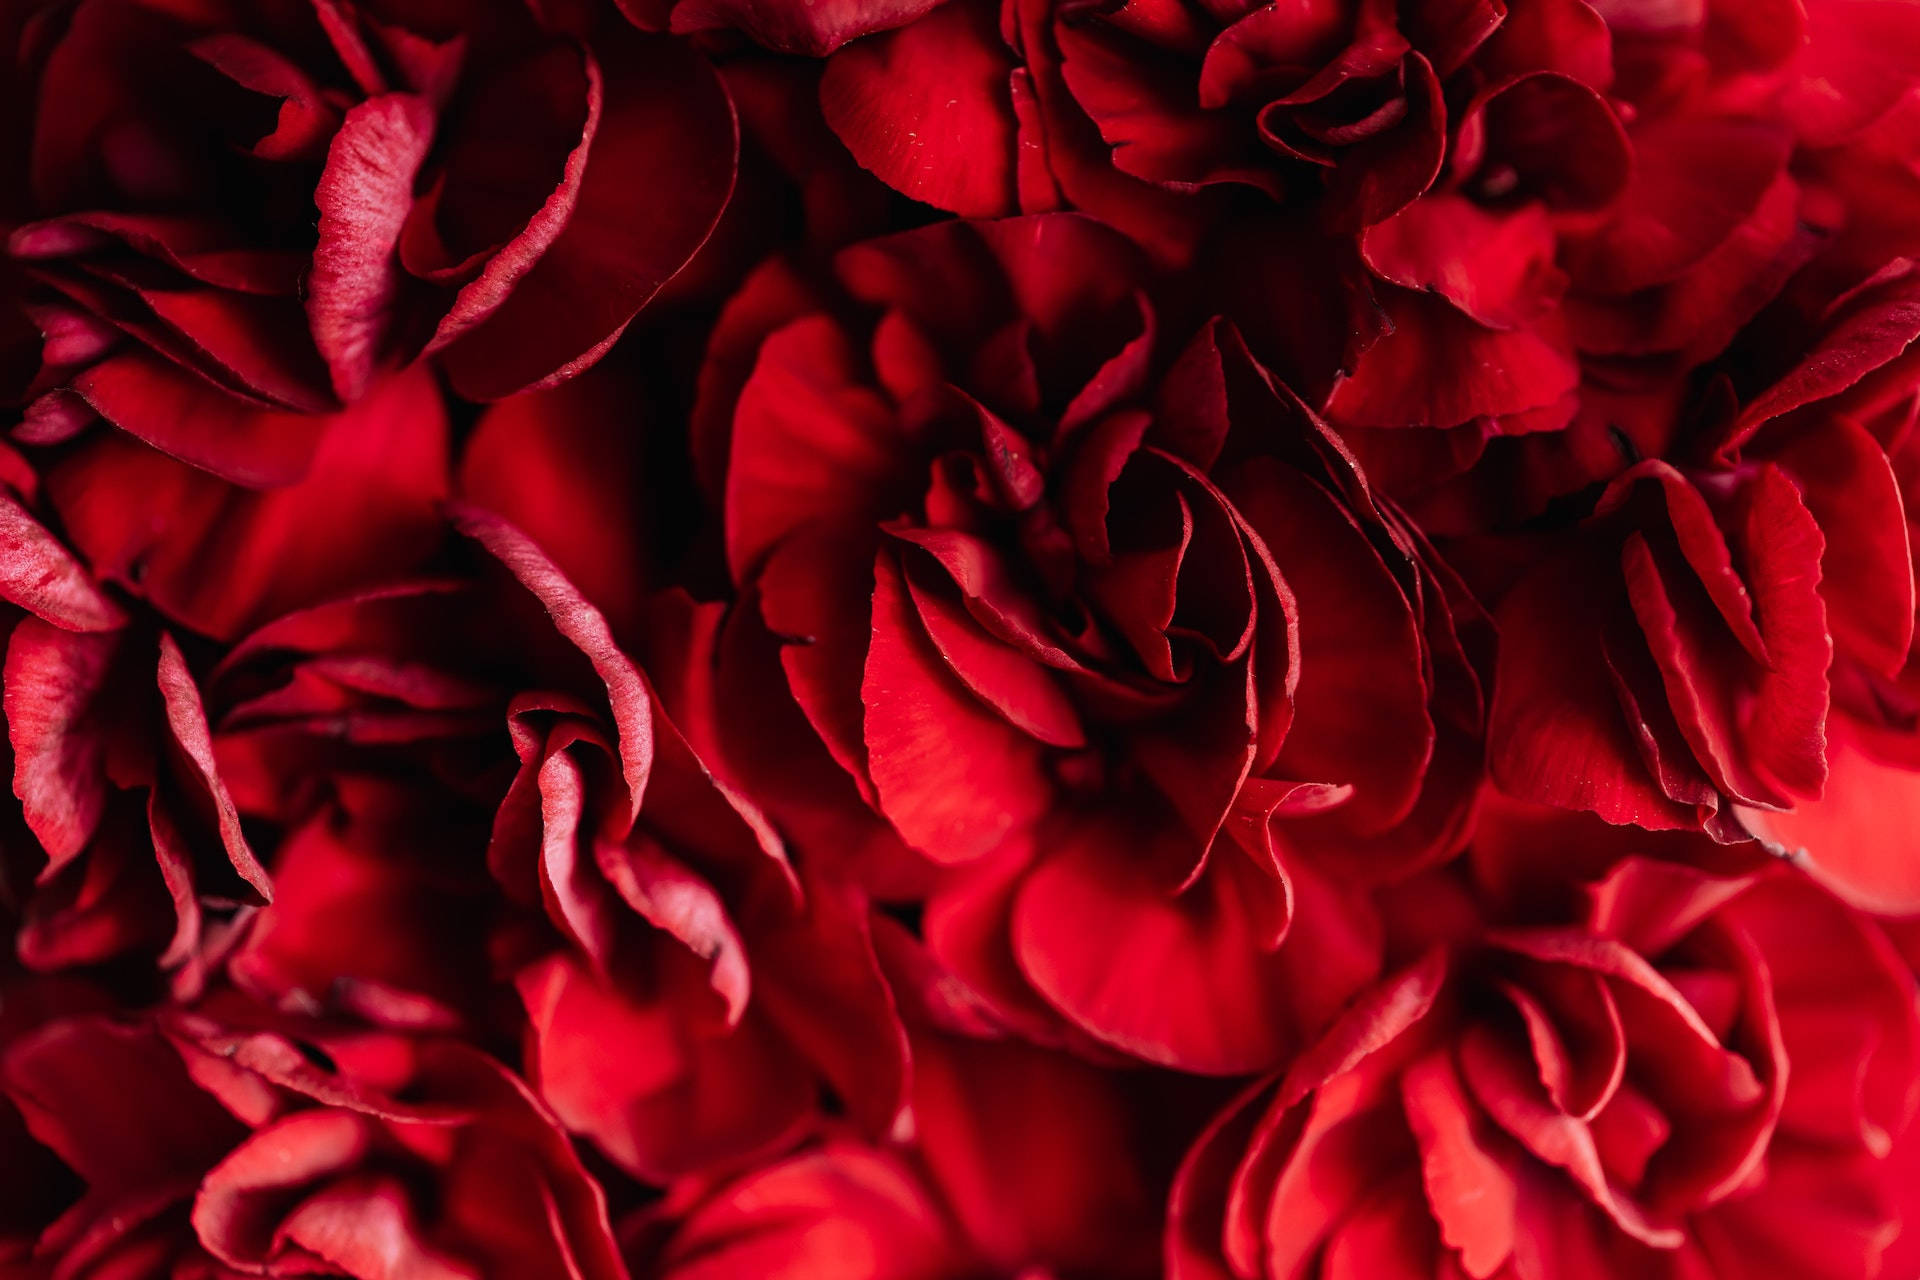 Red Roses Scarlet Petals Background